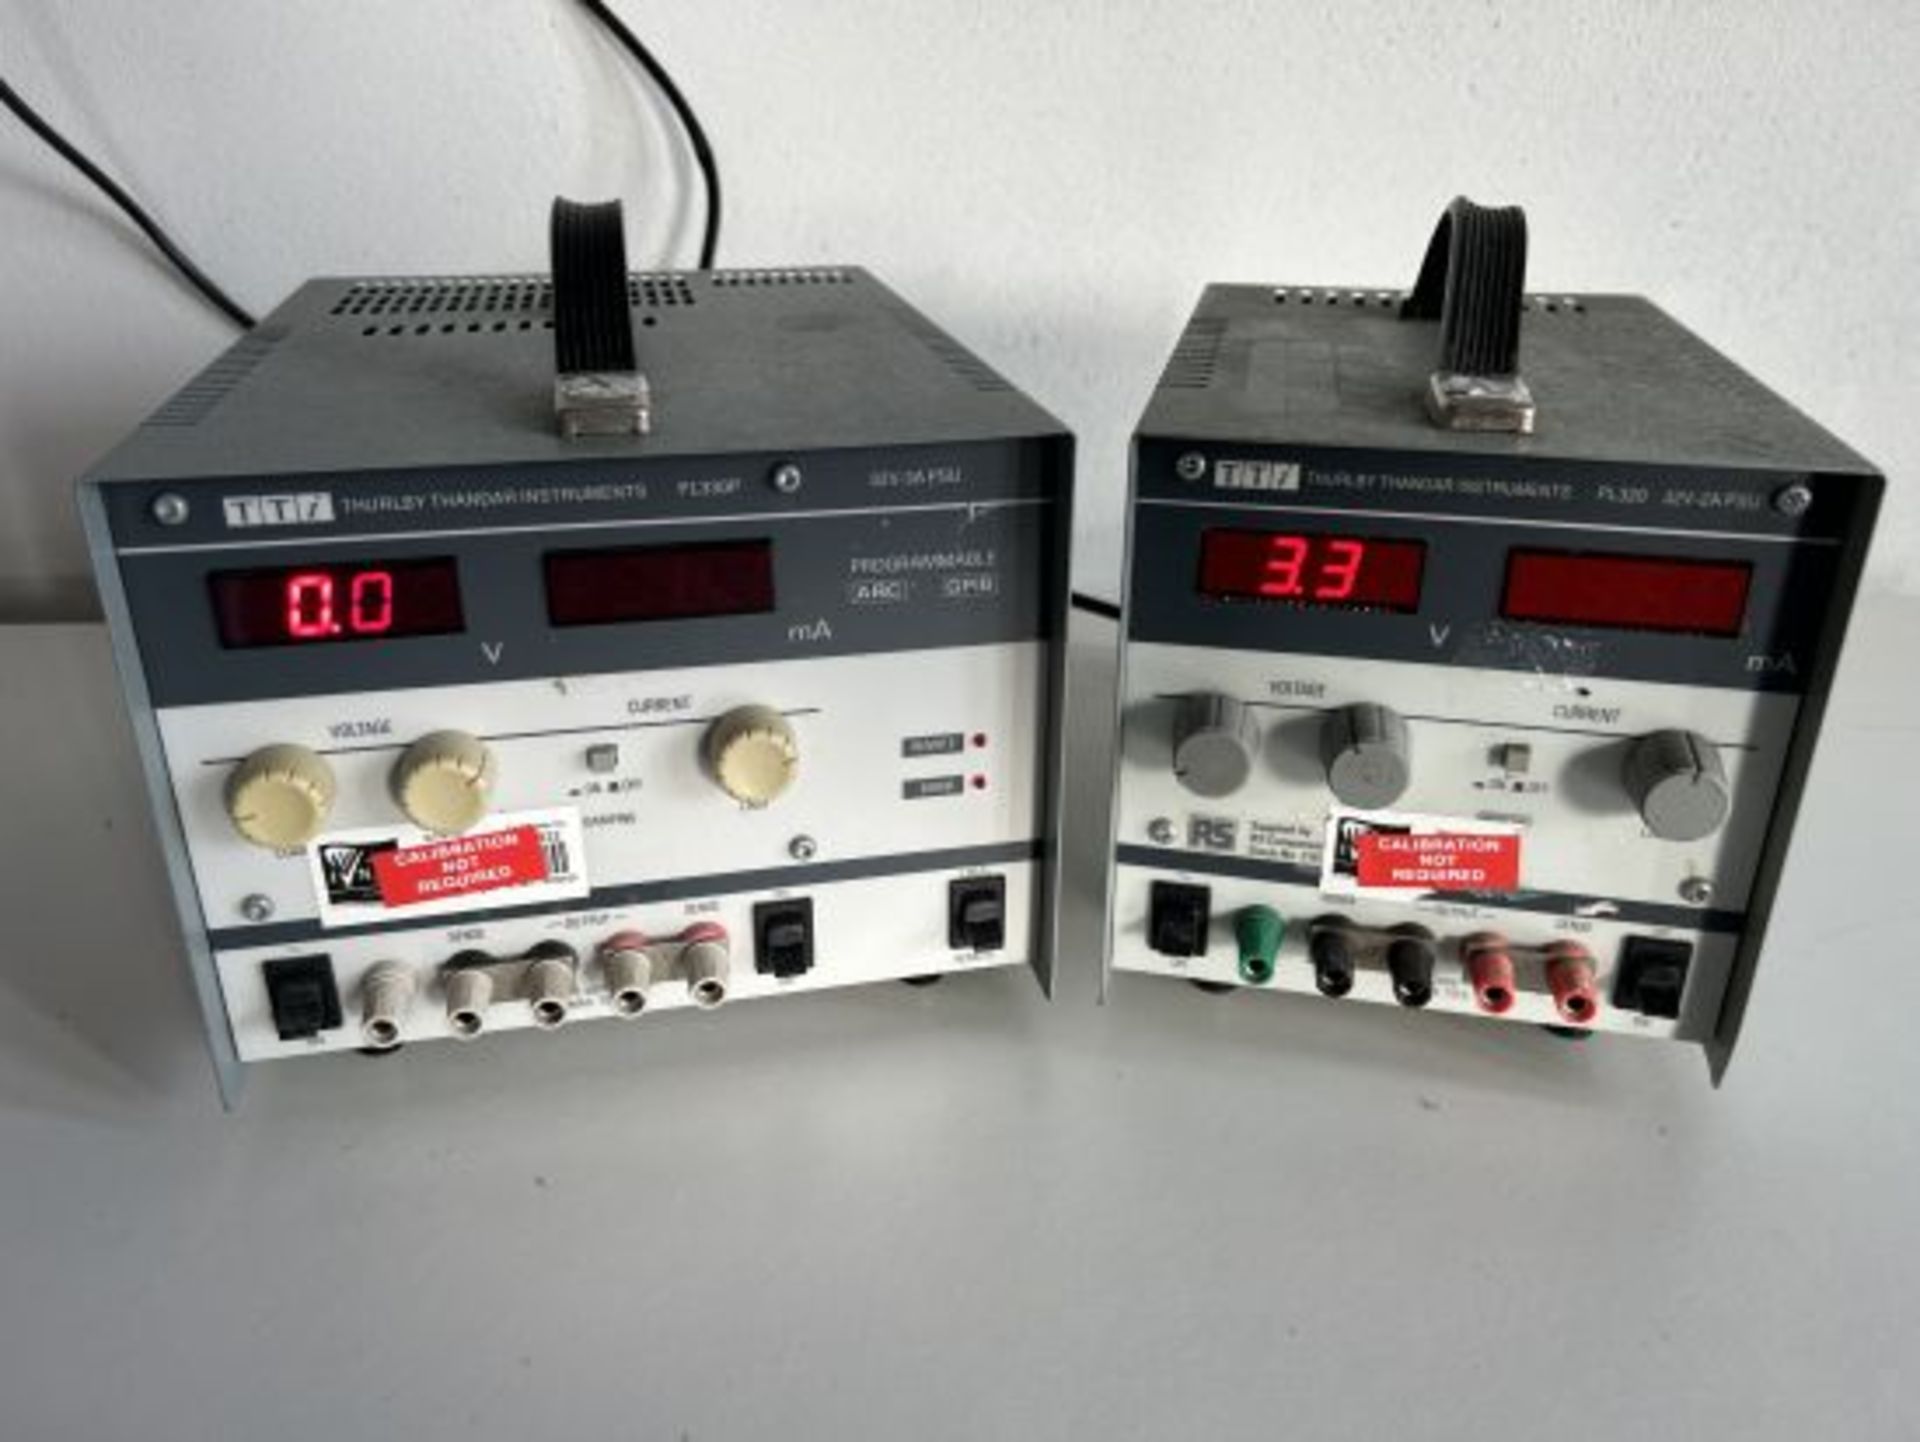 Thurlby Thander PL-330P 32V-2A and Thurlby Thander PL-320 32V-2A PSU Power Supply.